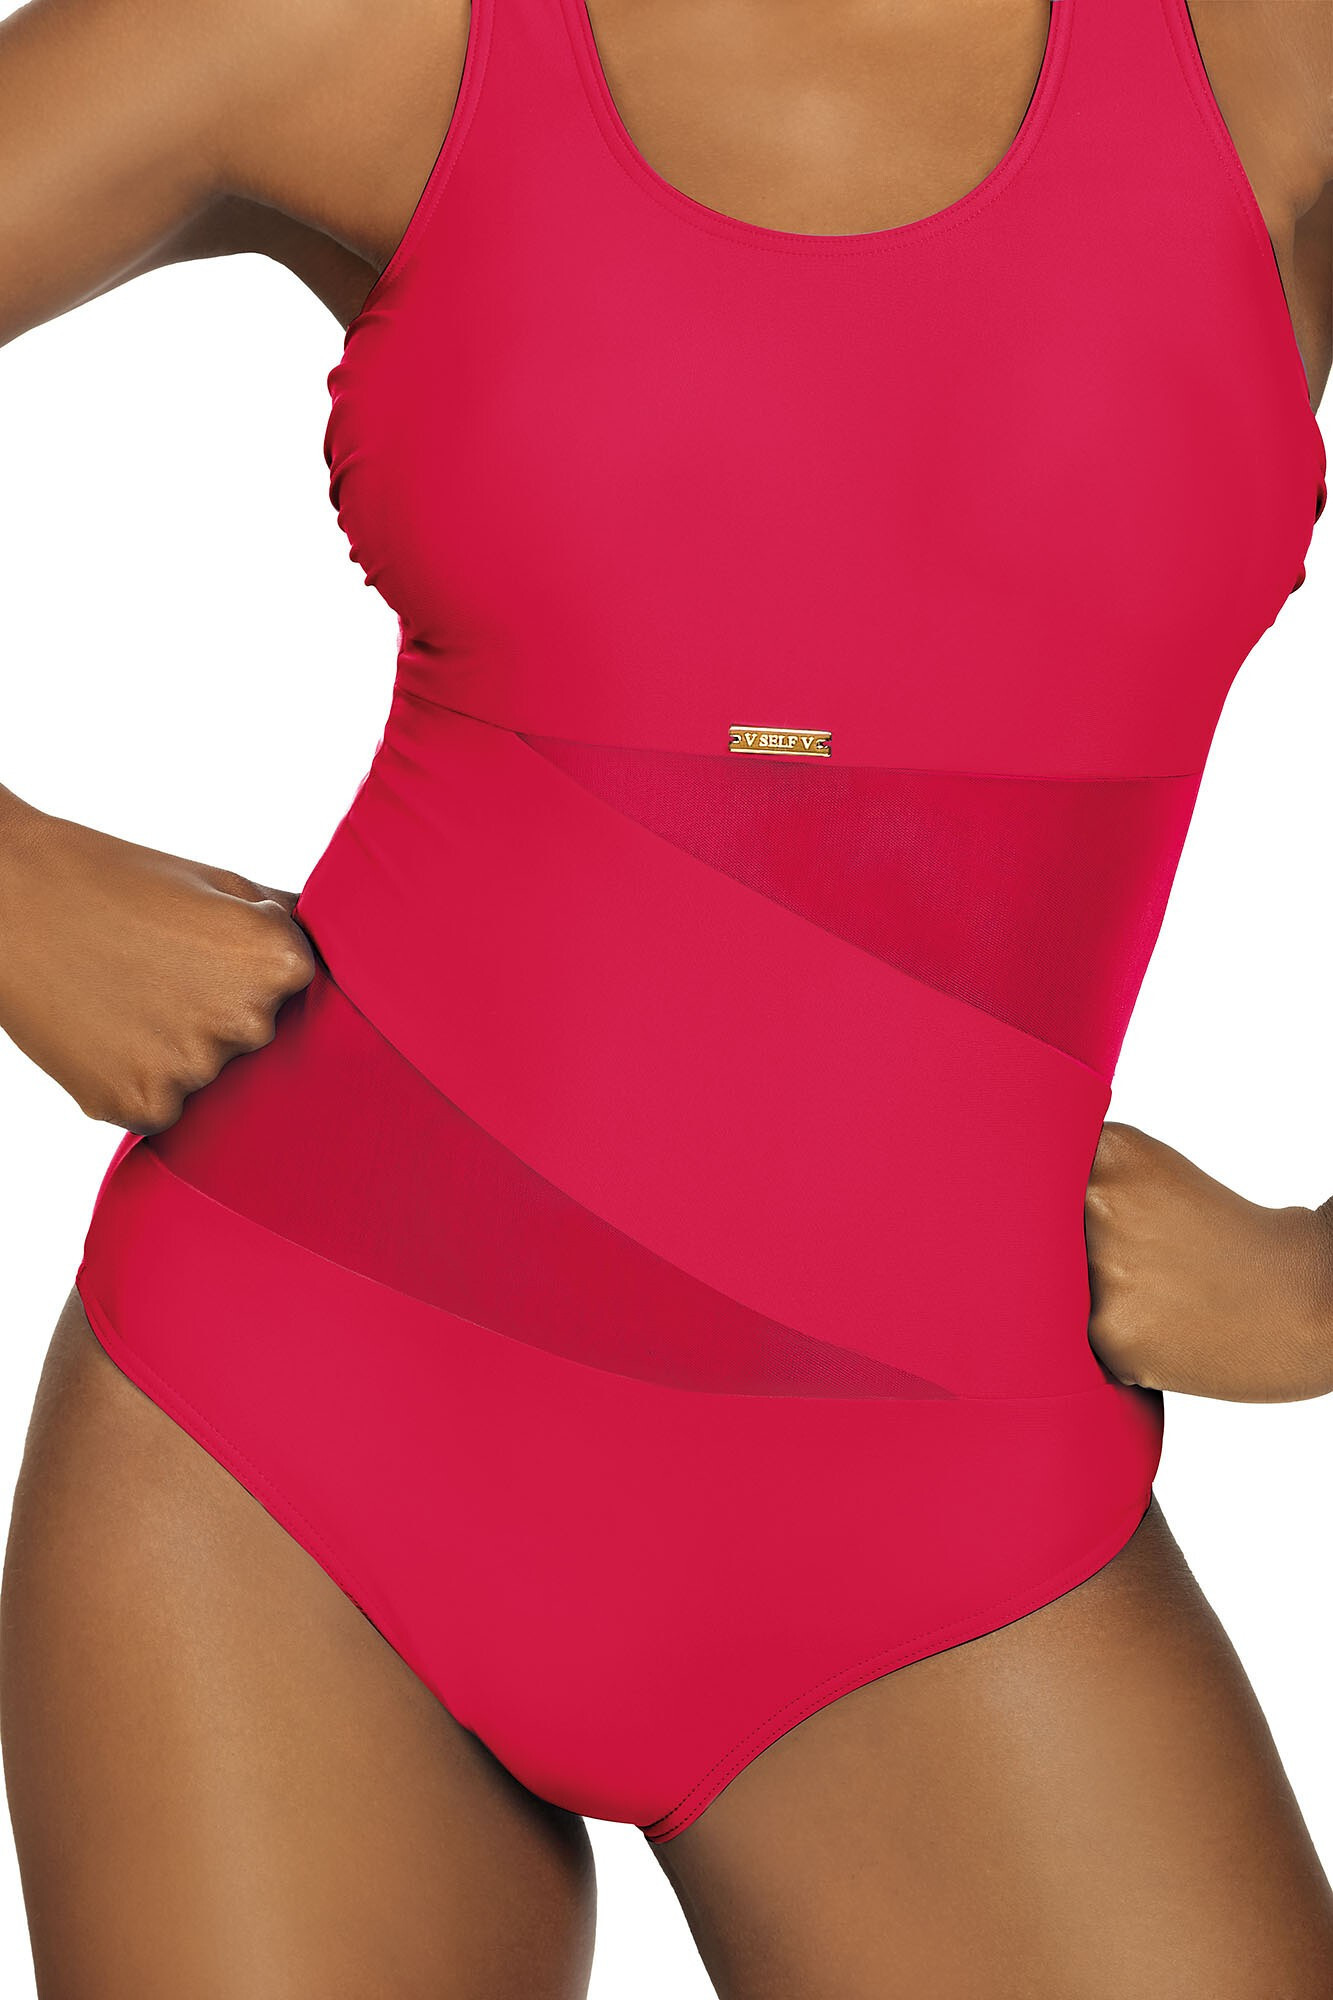 Dámské jednodílné plavky S36W-2d Fashion sport tm. růžové - Self S